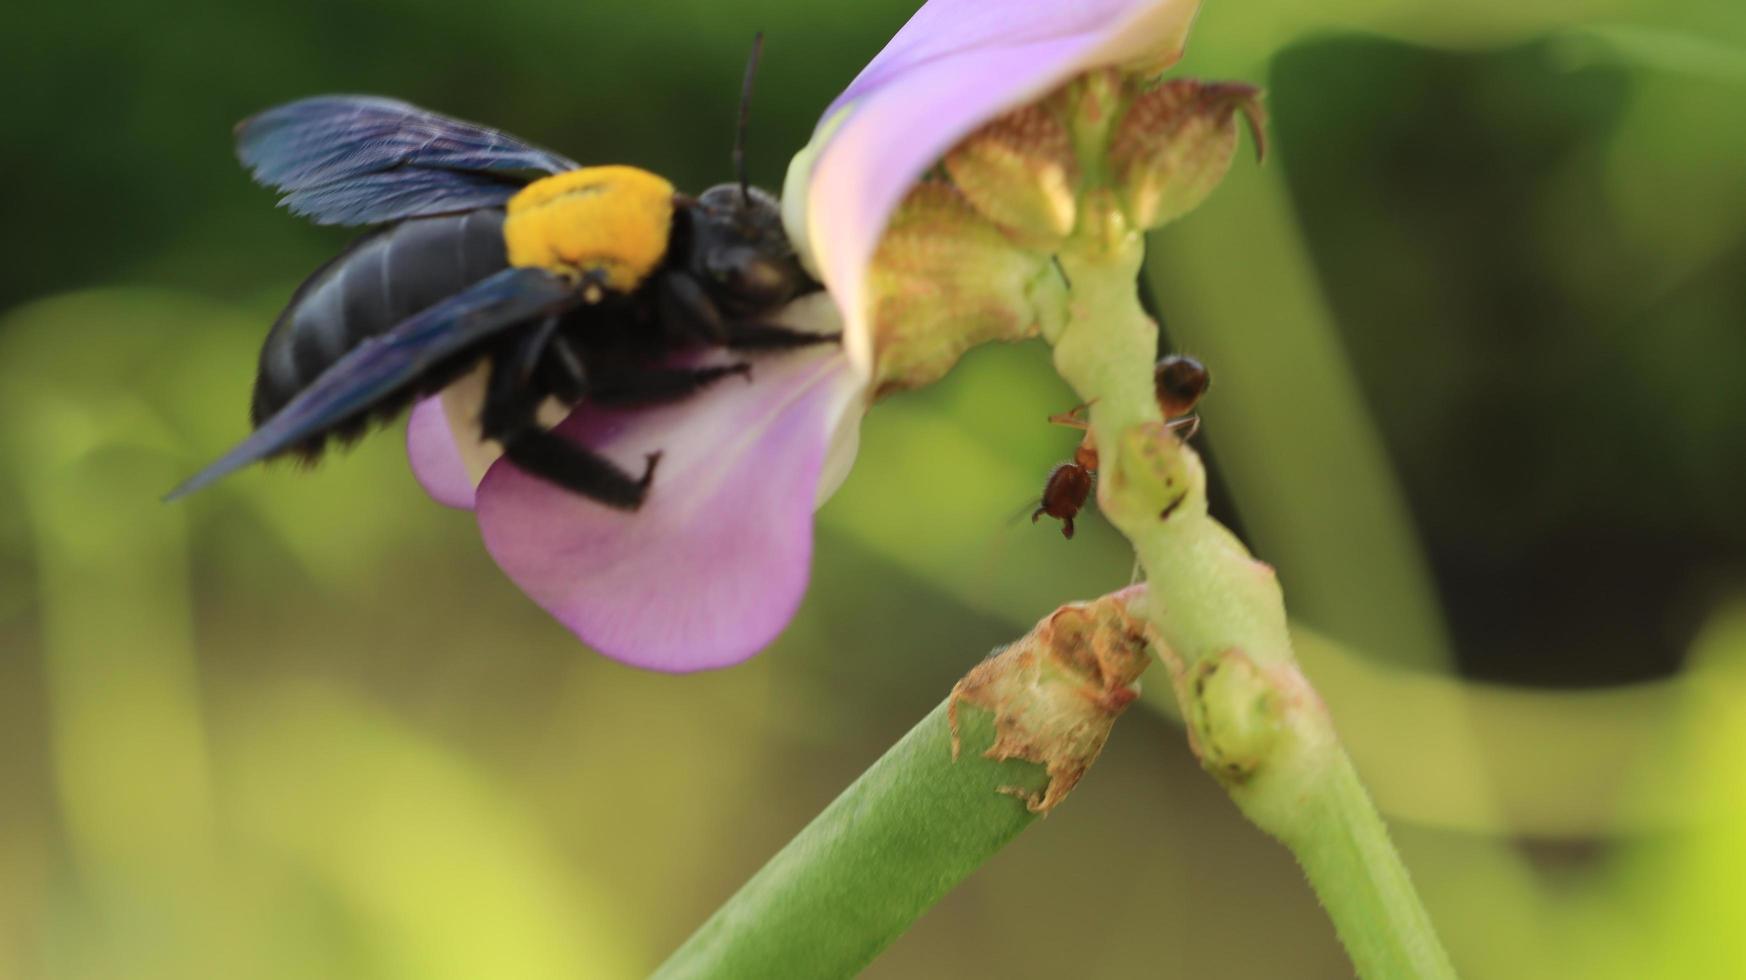 beetles help pollinate flower buds photo